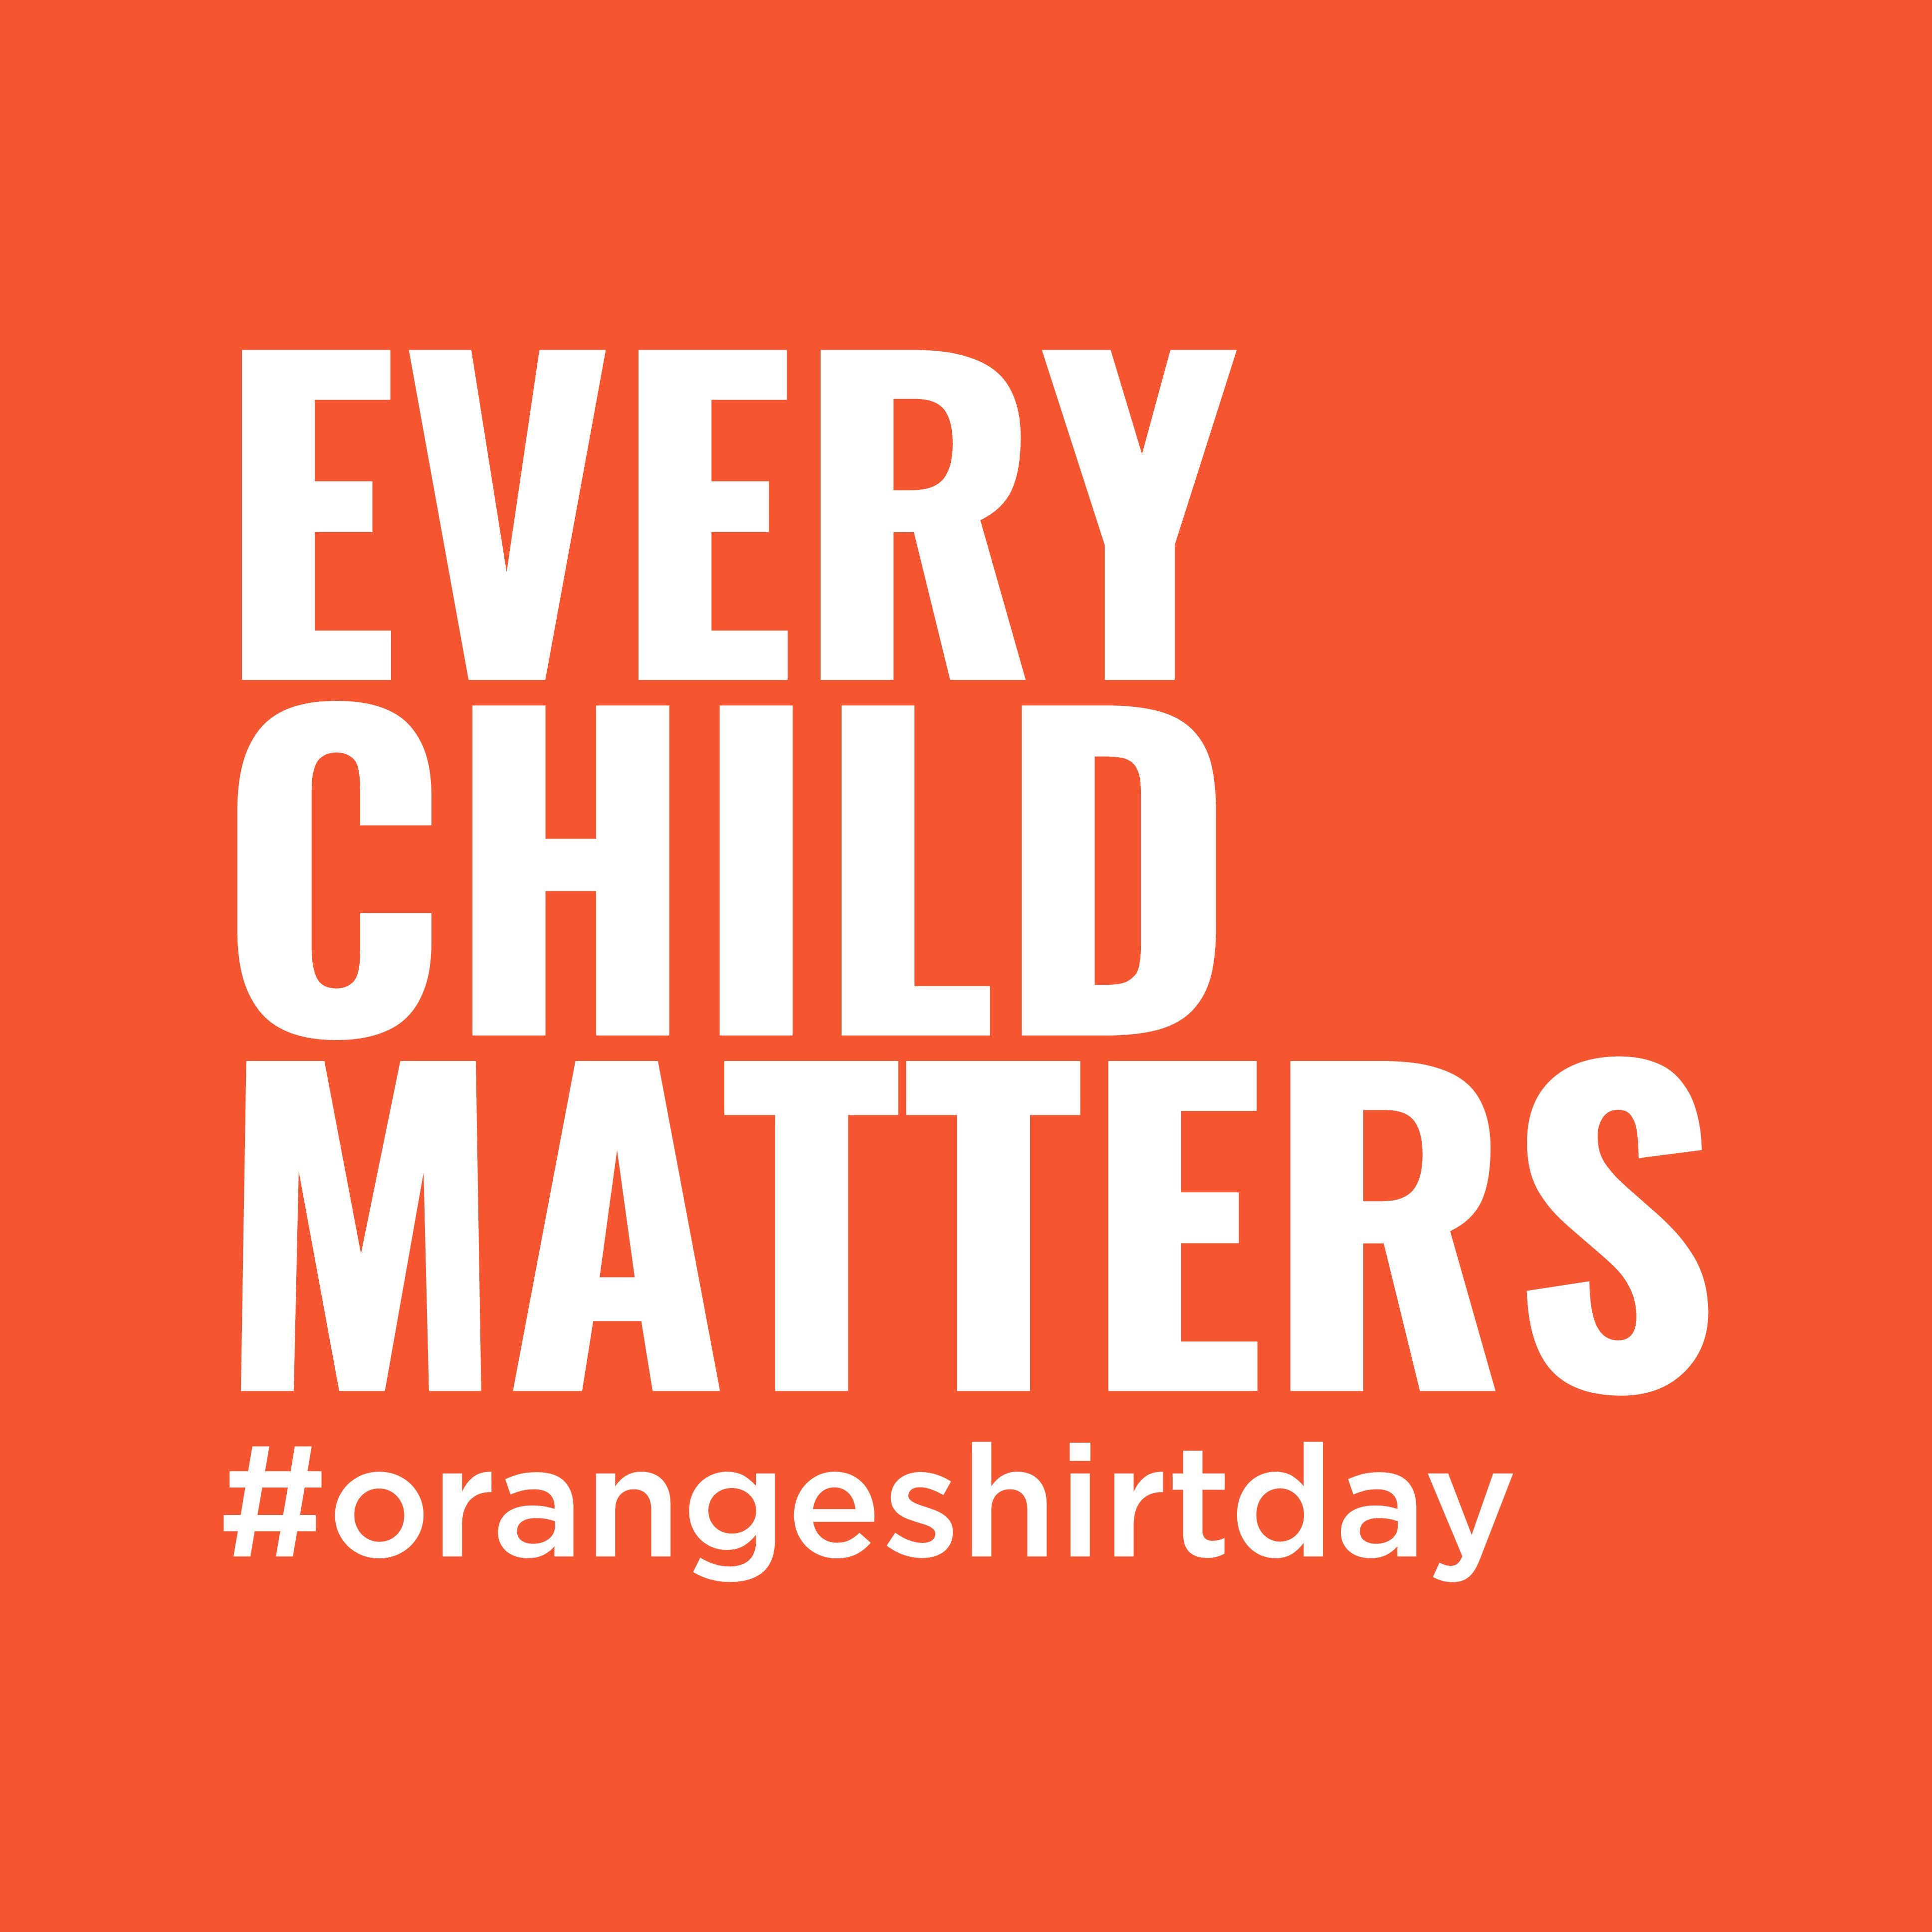 Every Child Matters #orangeshirtday